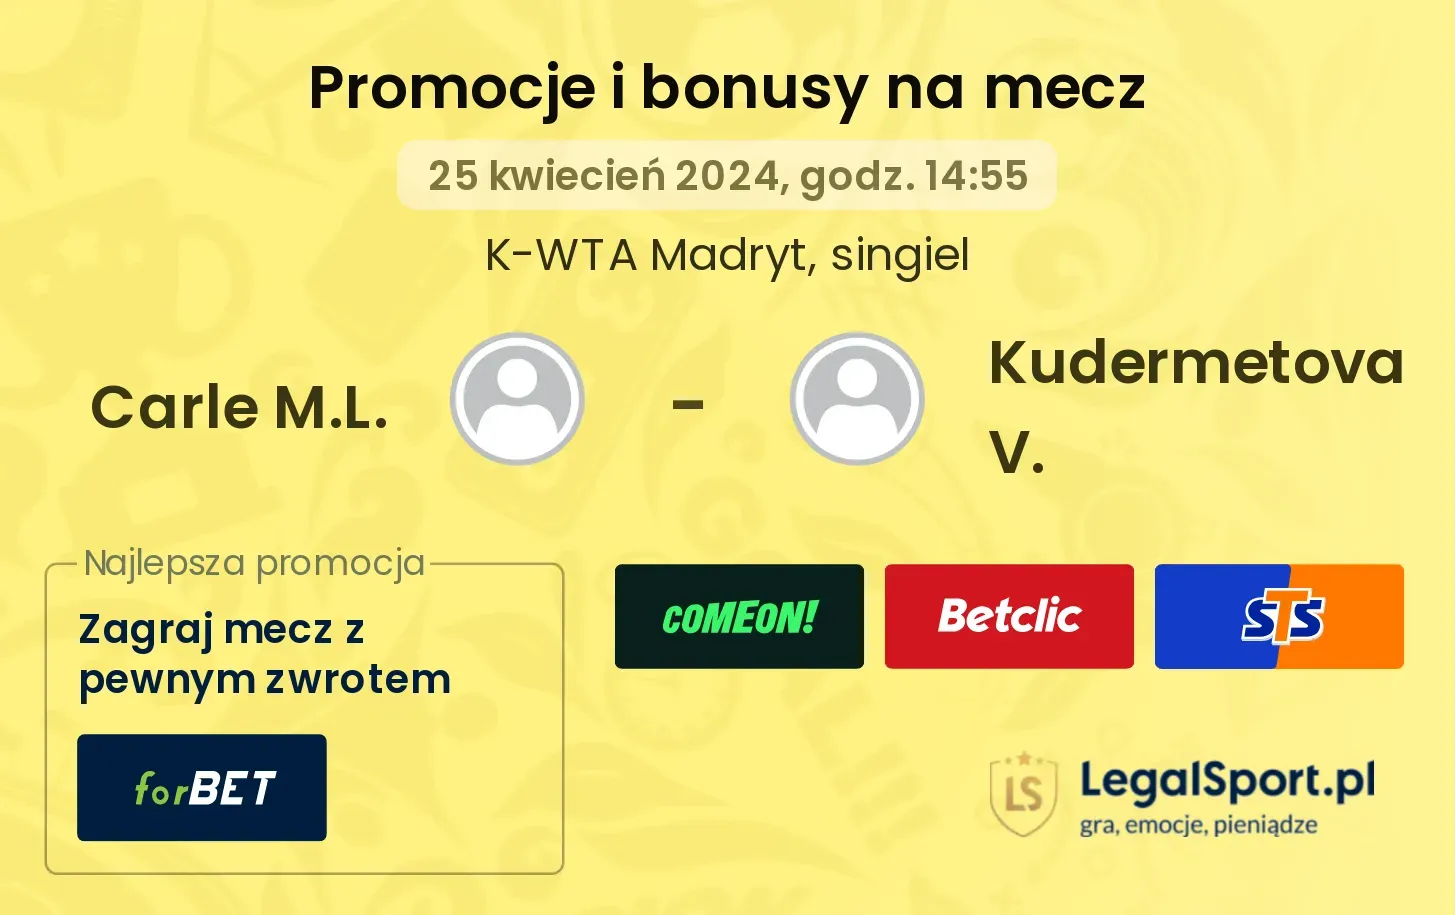 Carle M.L. - Kudermetova V. promocje bonusy na mecz